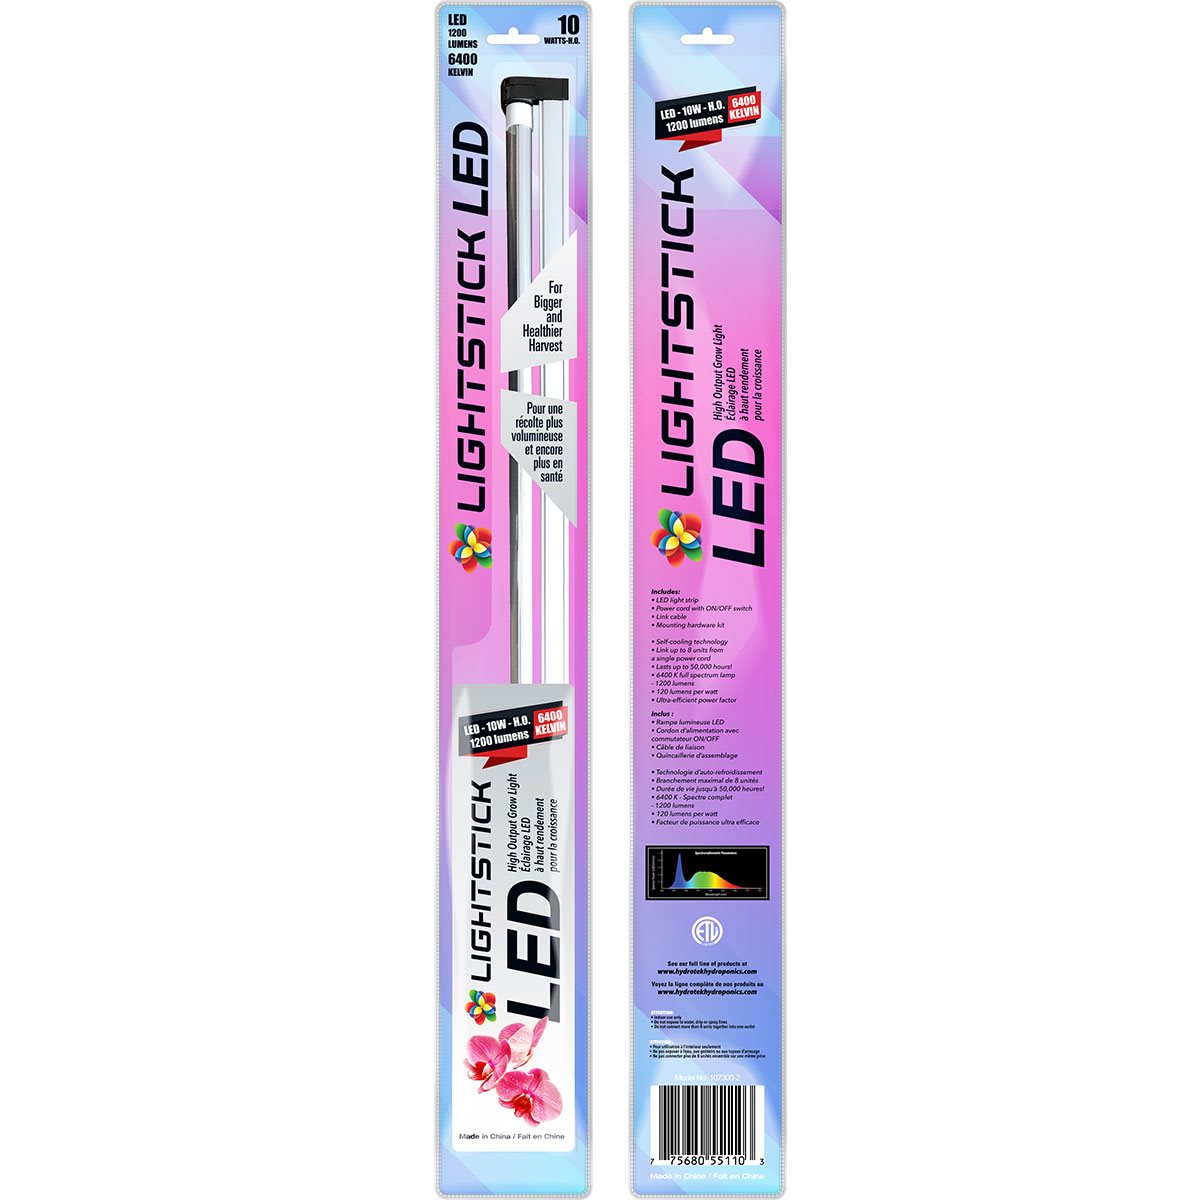 Product Secondary Image:Lightstick LED 2' Grow Light 10W Strip 120-240V Linkable